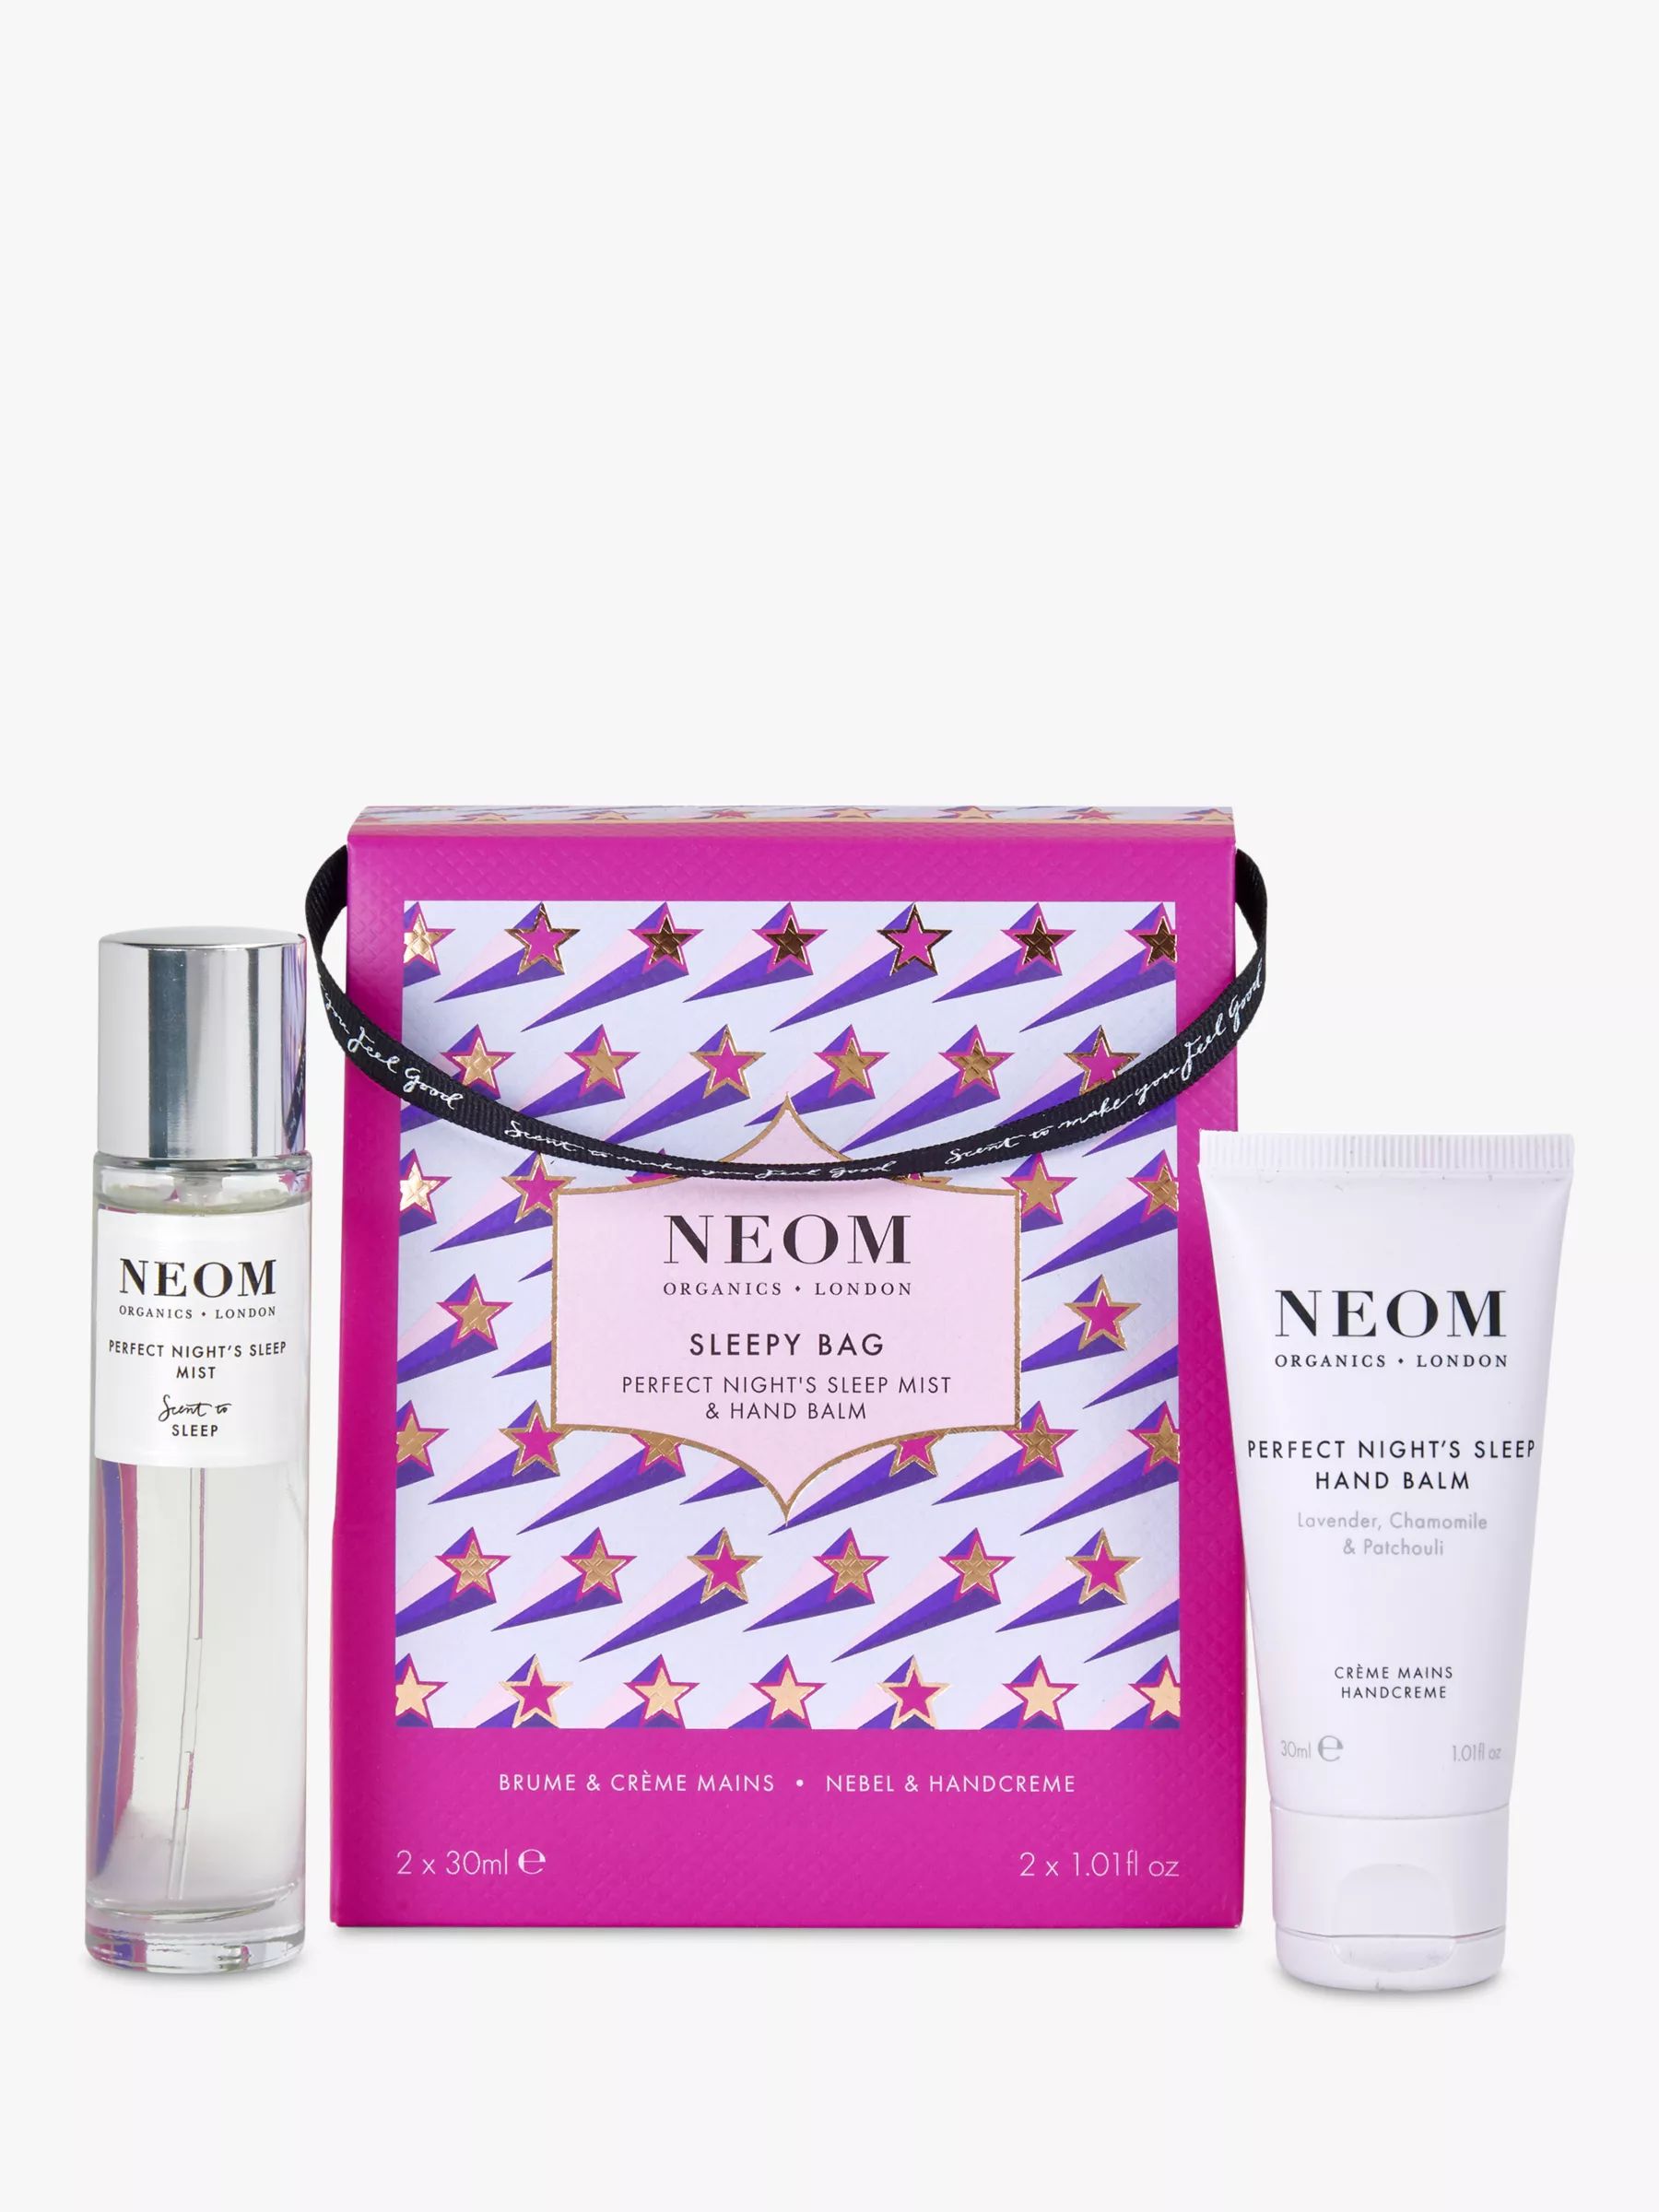 Neom Organics London Sleepy Bag Bodycare Gift Set | John Lewis (UK)